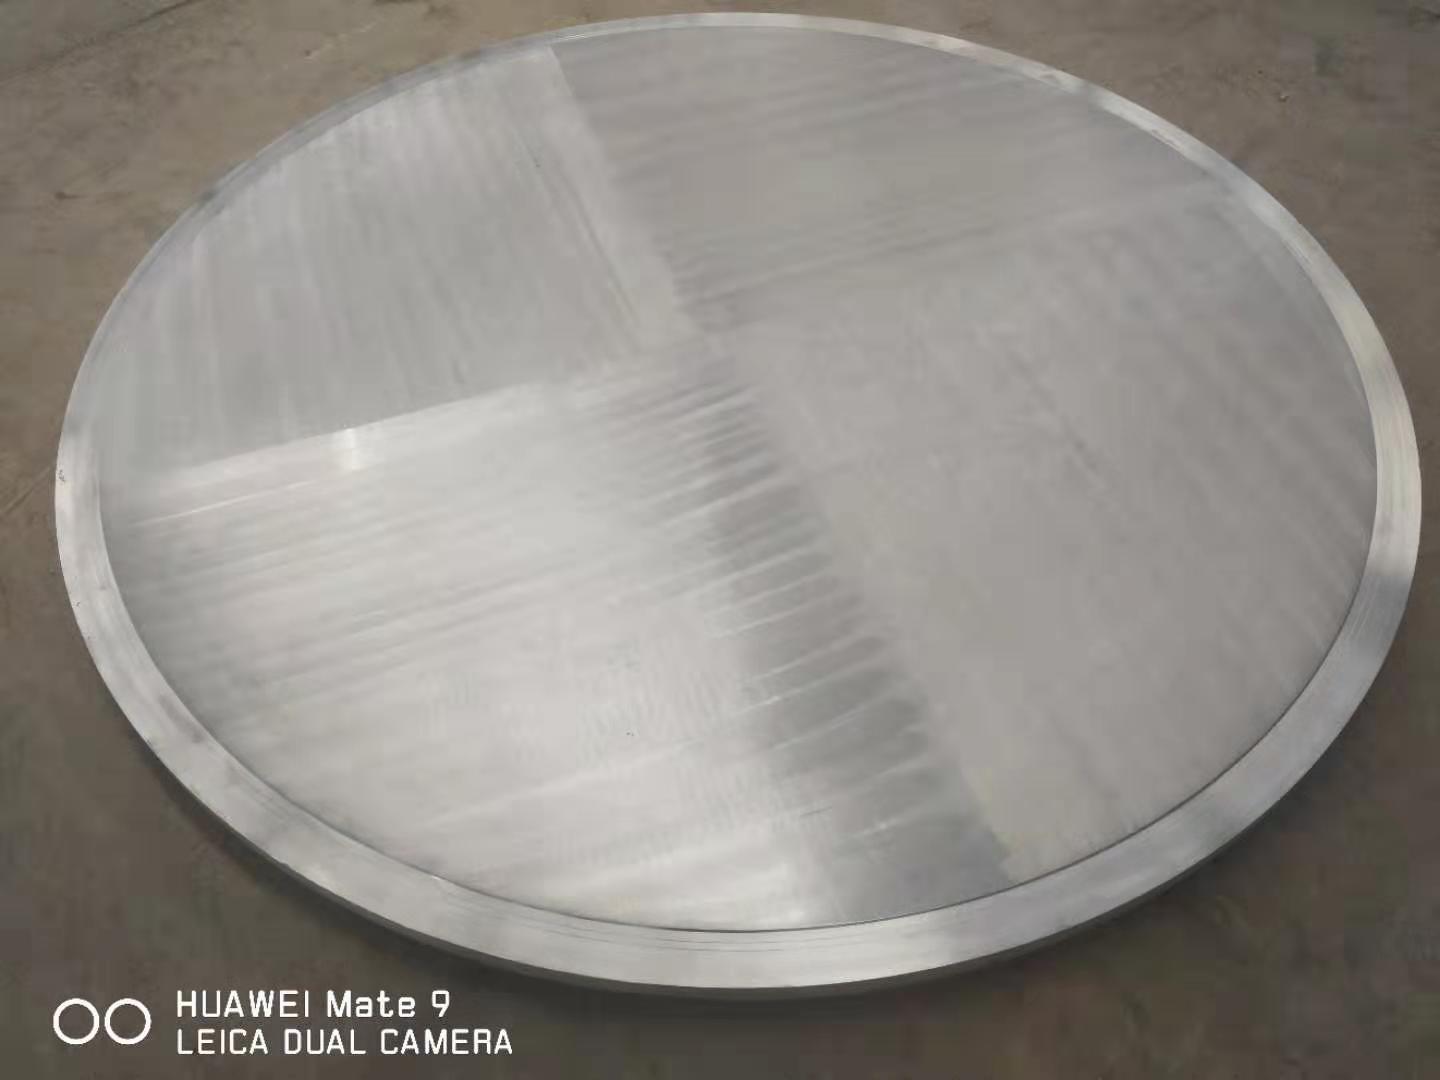 Titanium stainless steel compo